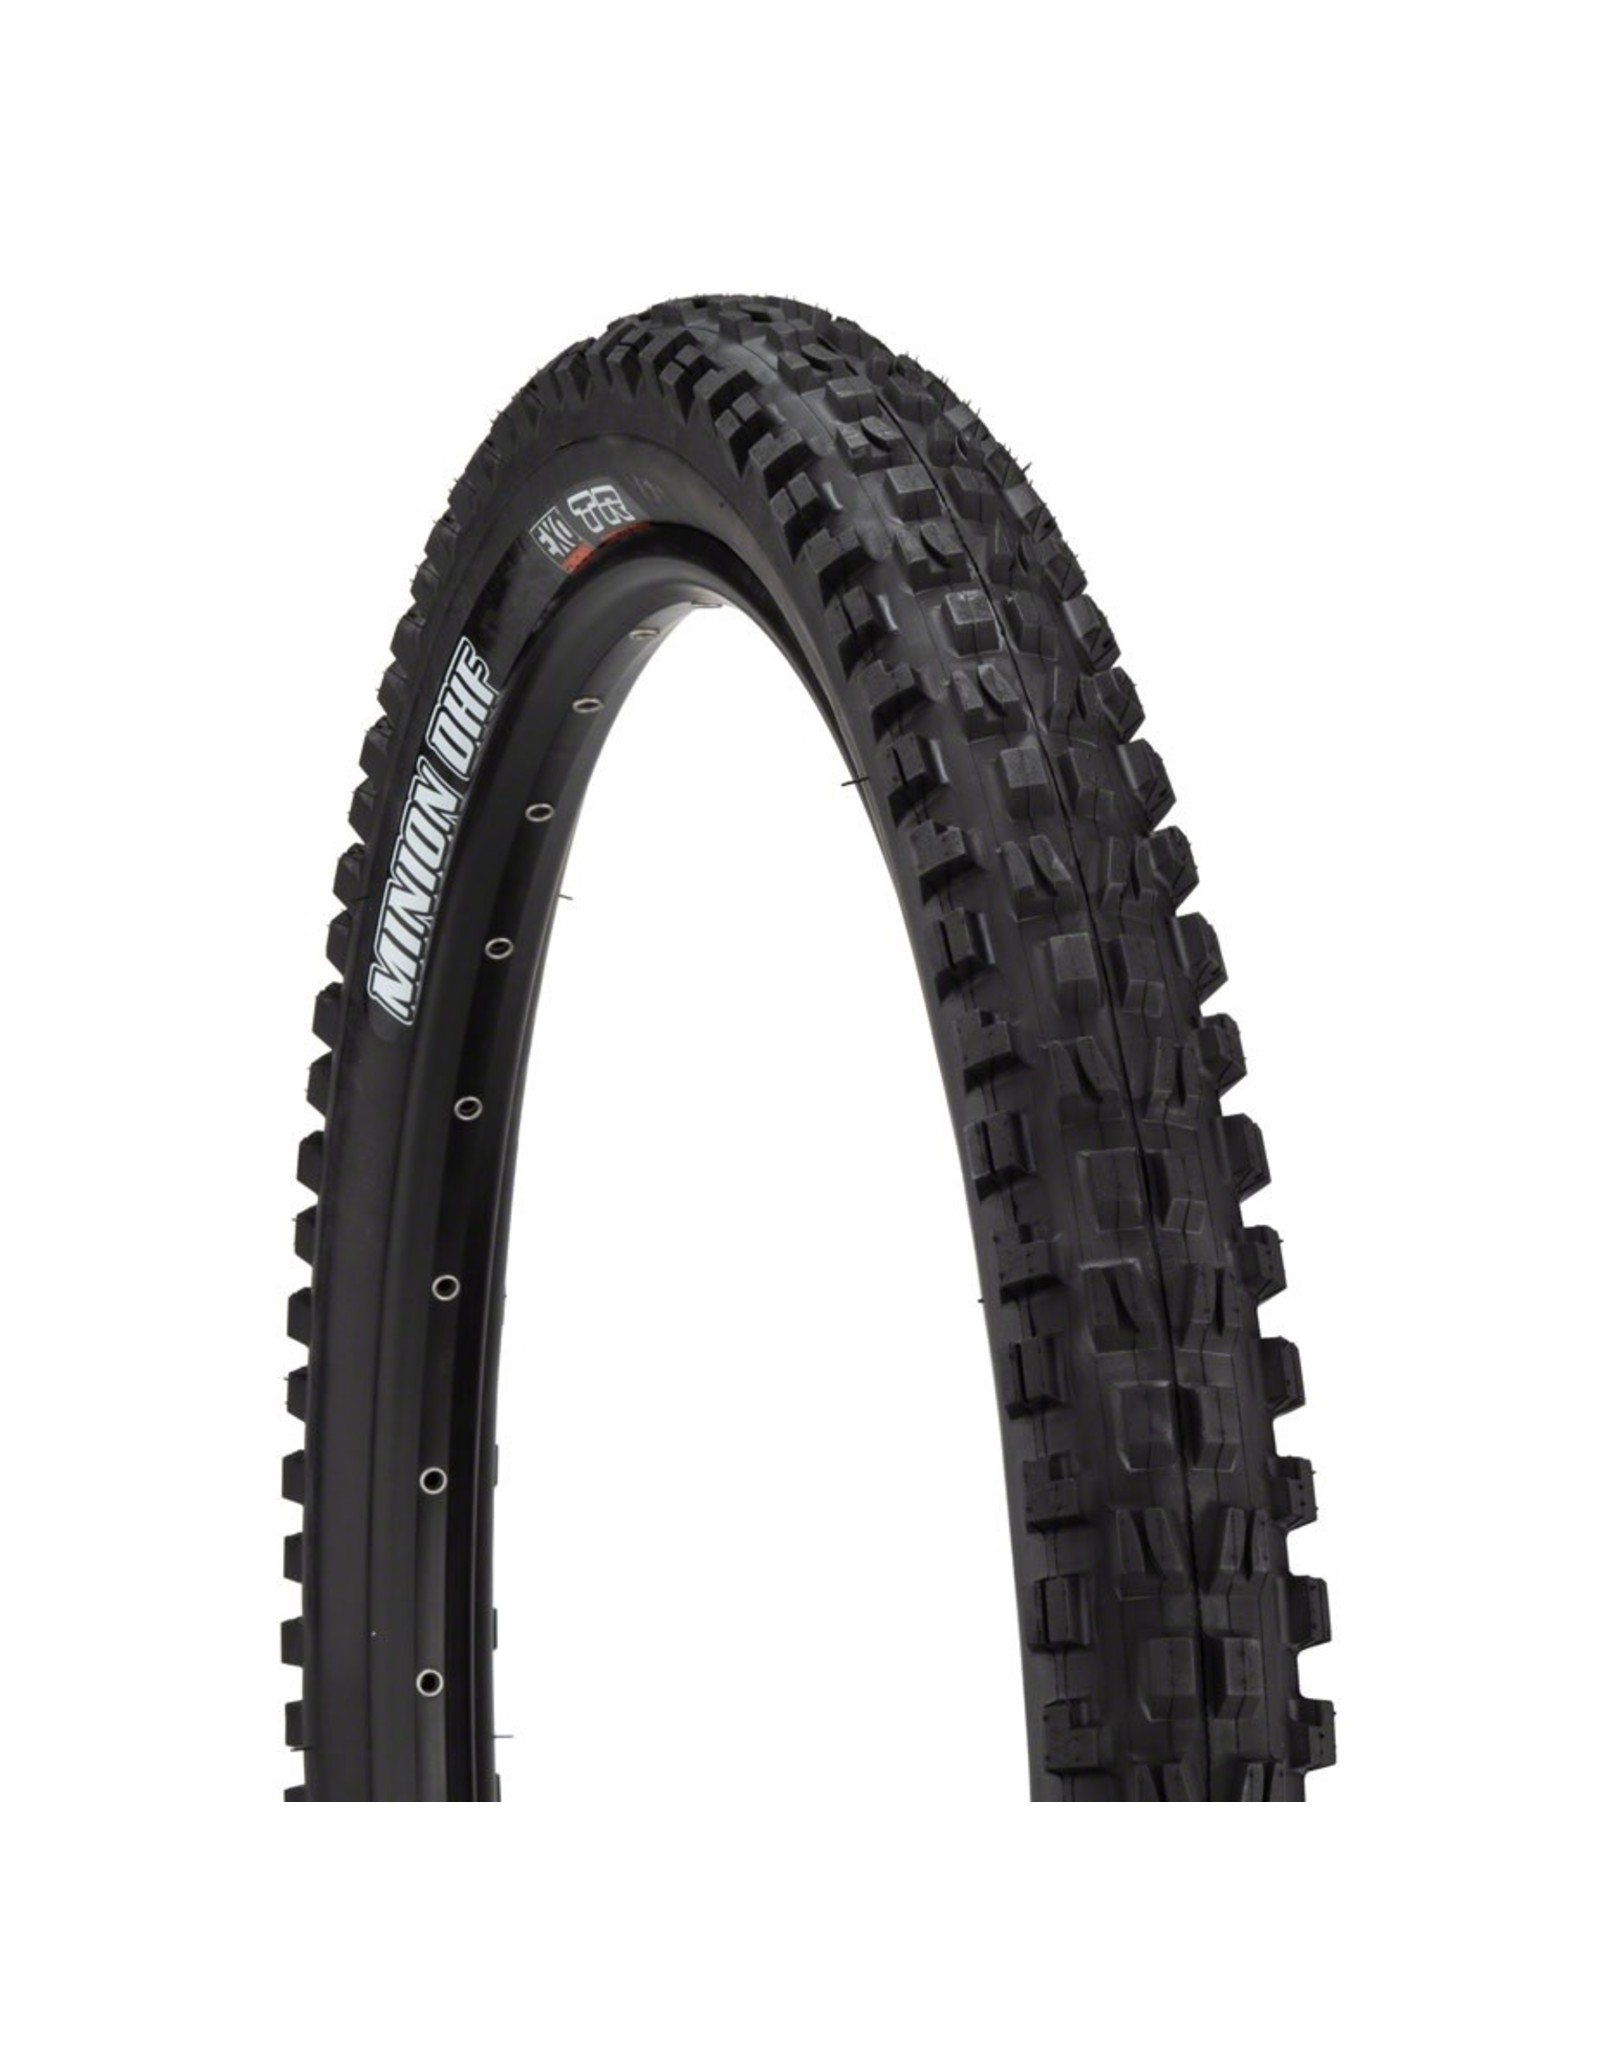 tubeless 27.5 tires